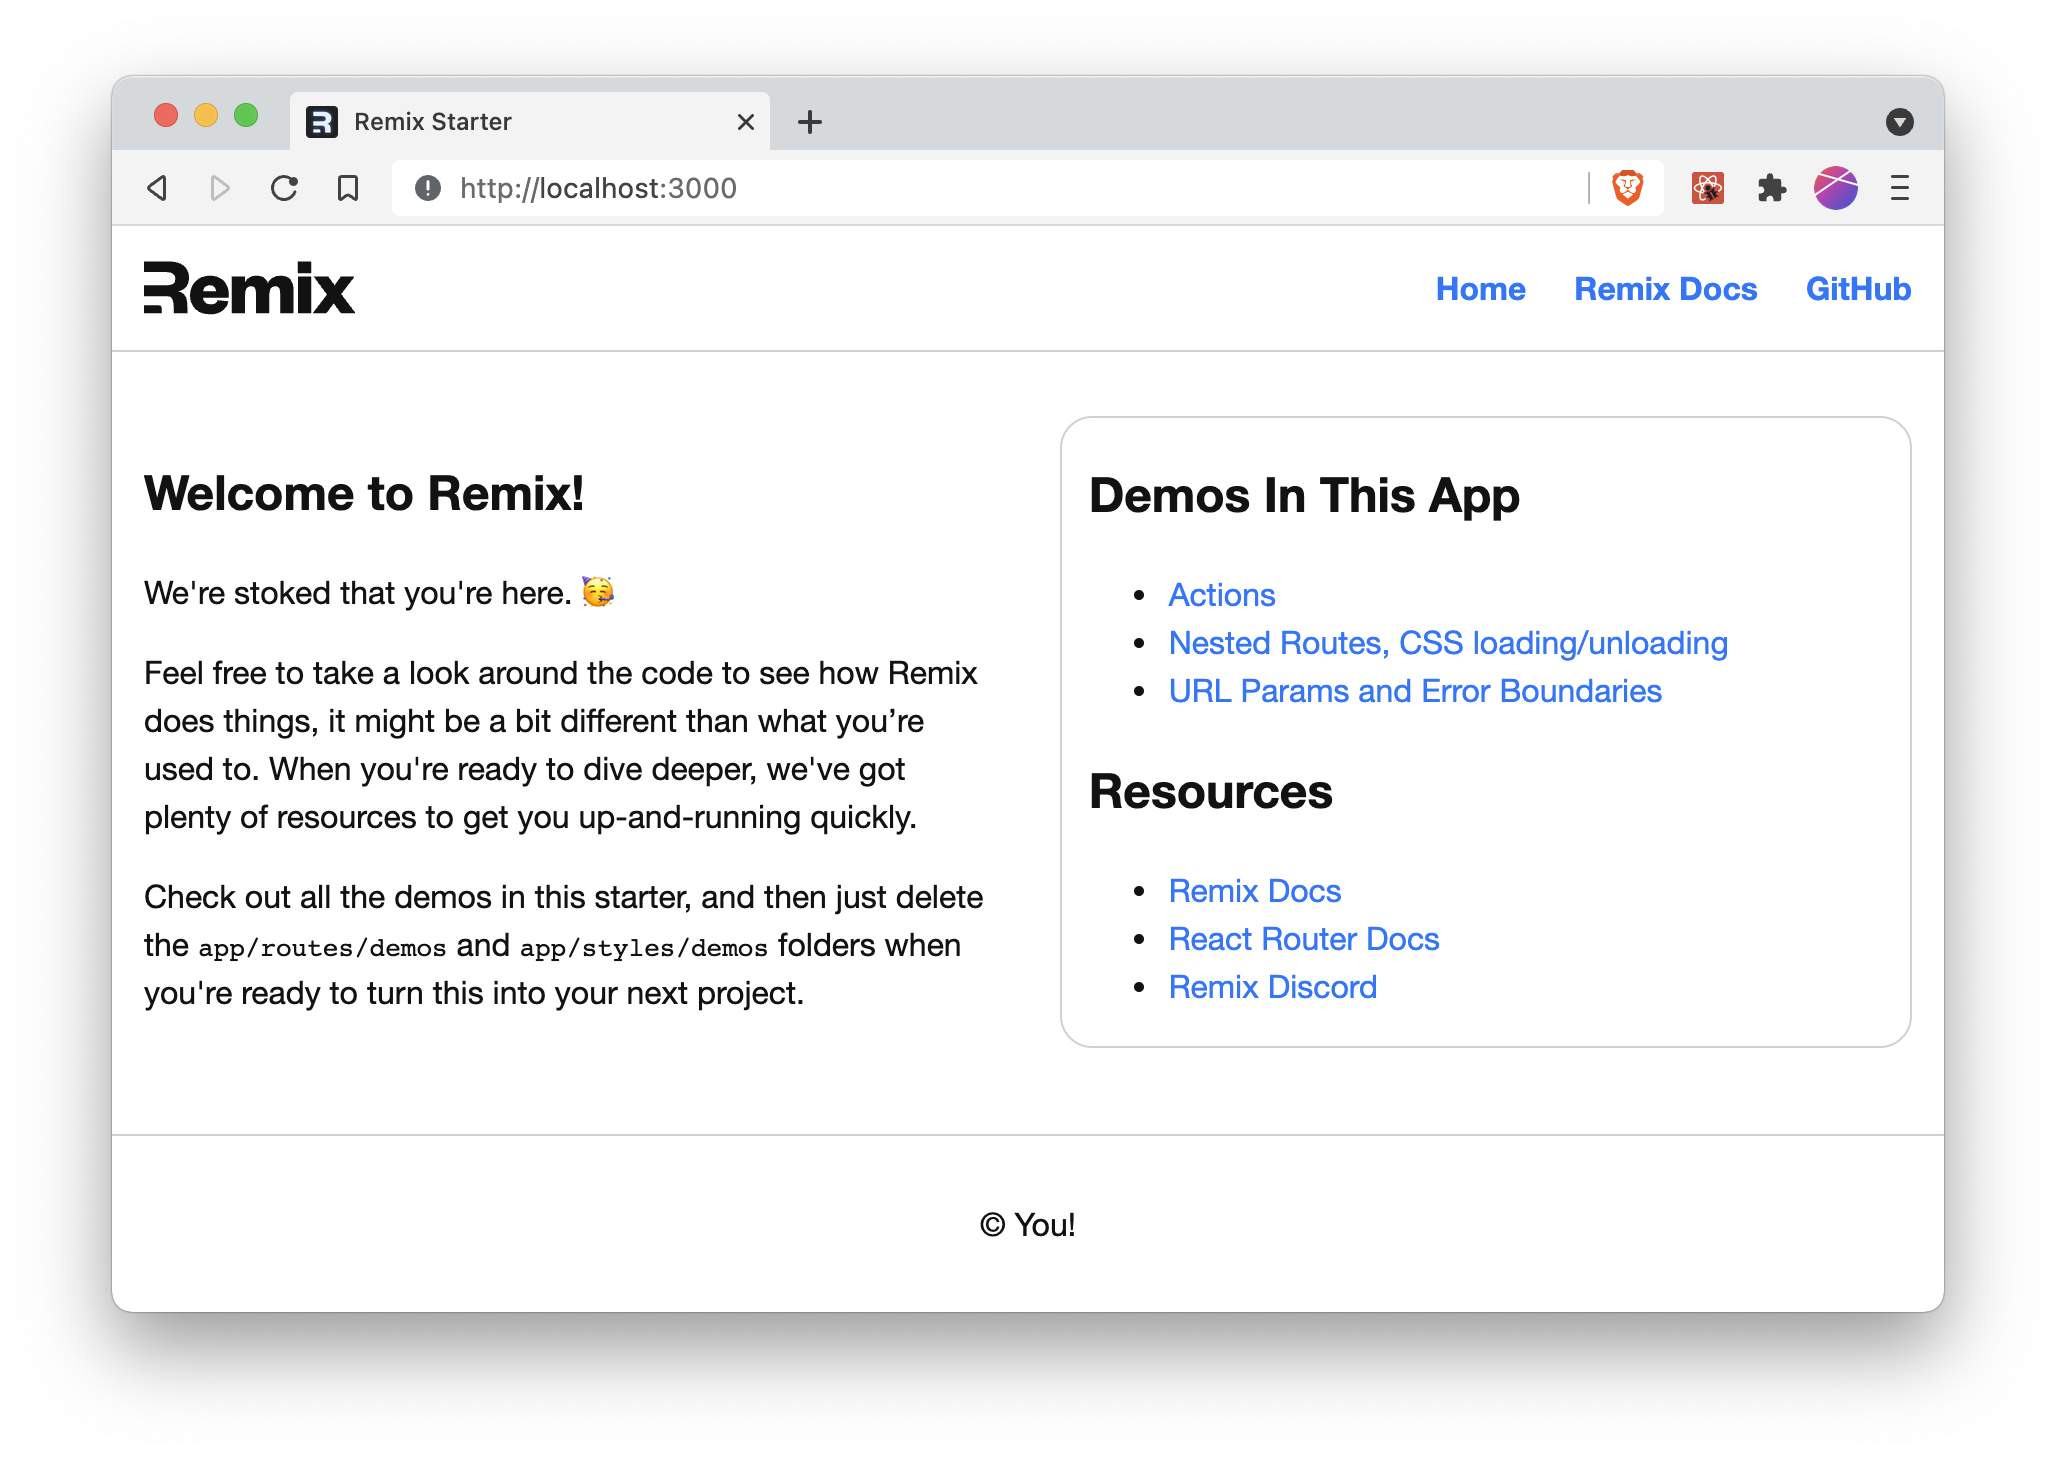 The Remix Starter App